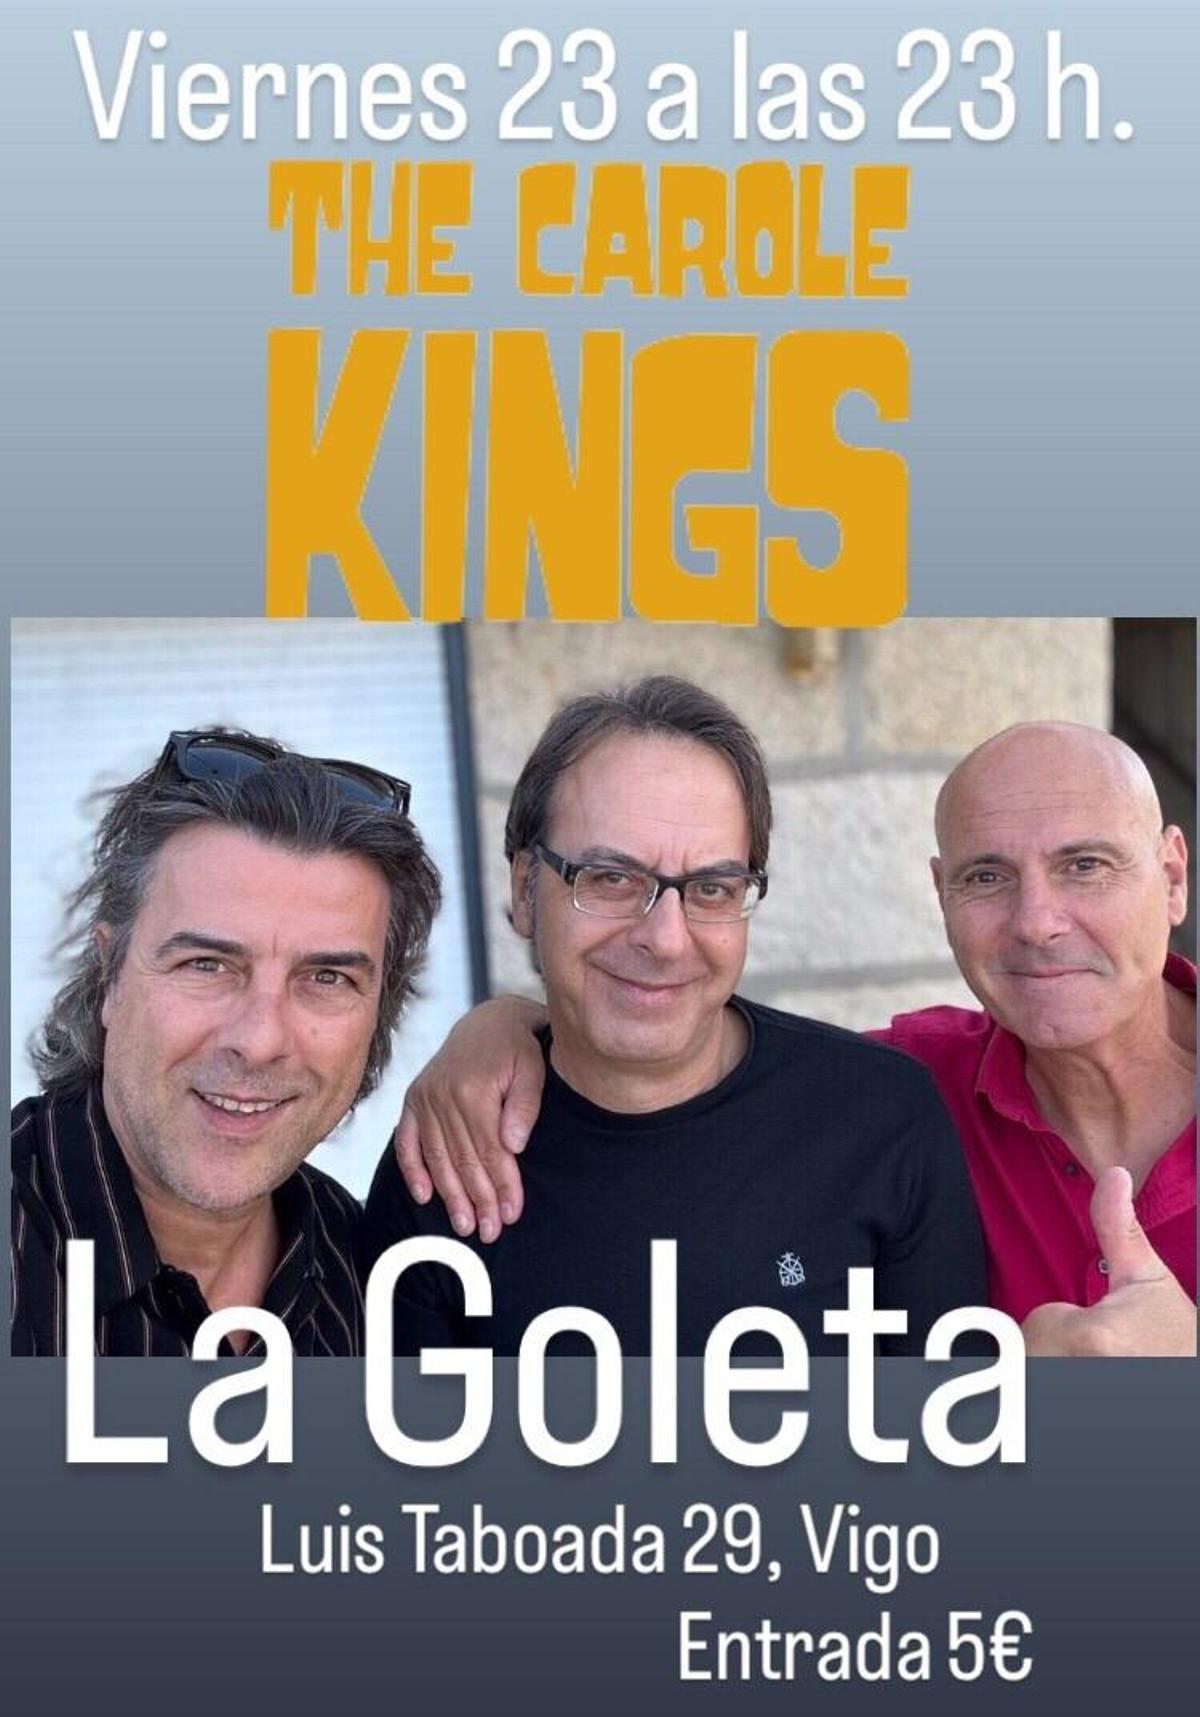 The Carole Kings tocan esta noche en La Goleta.